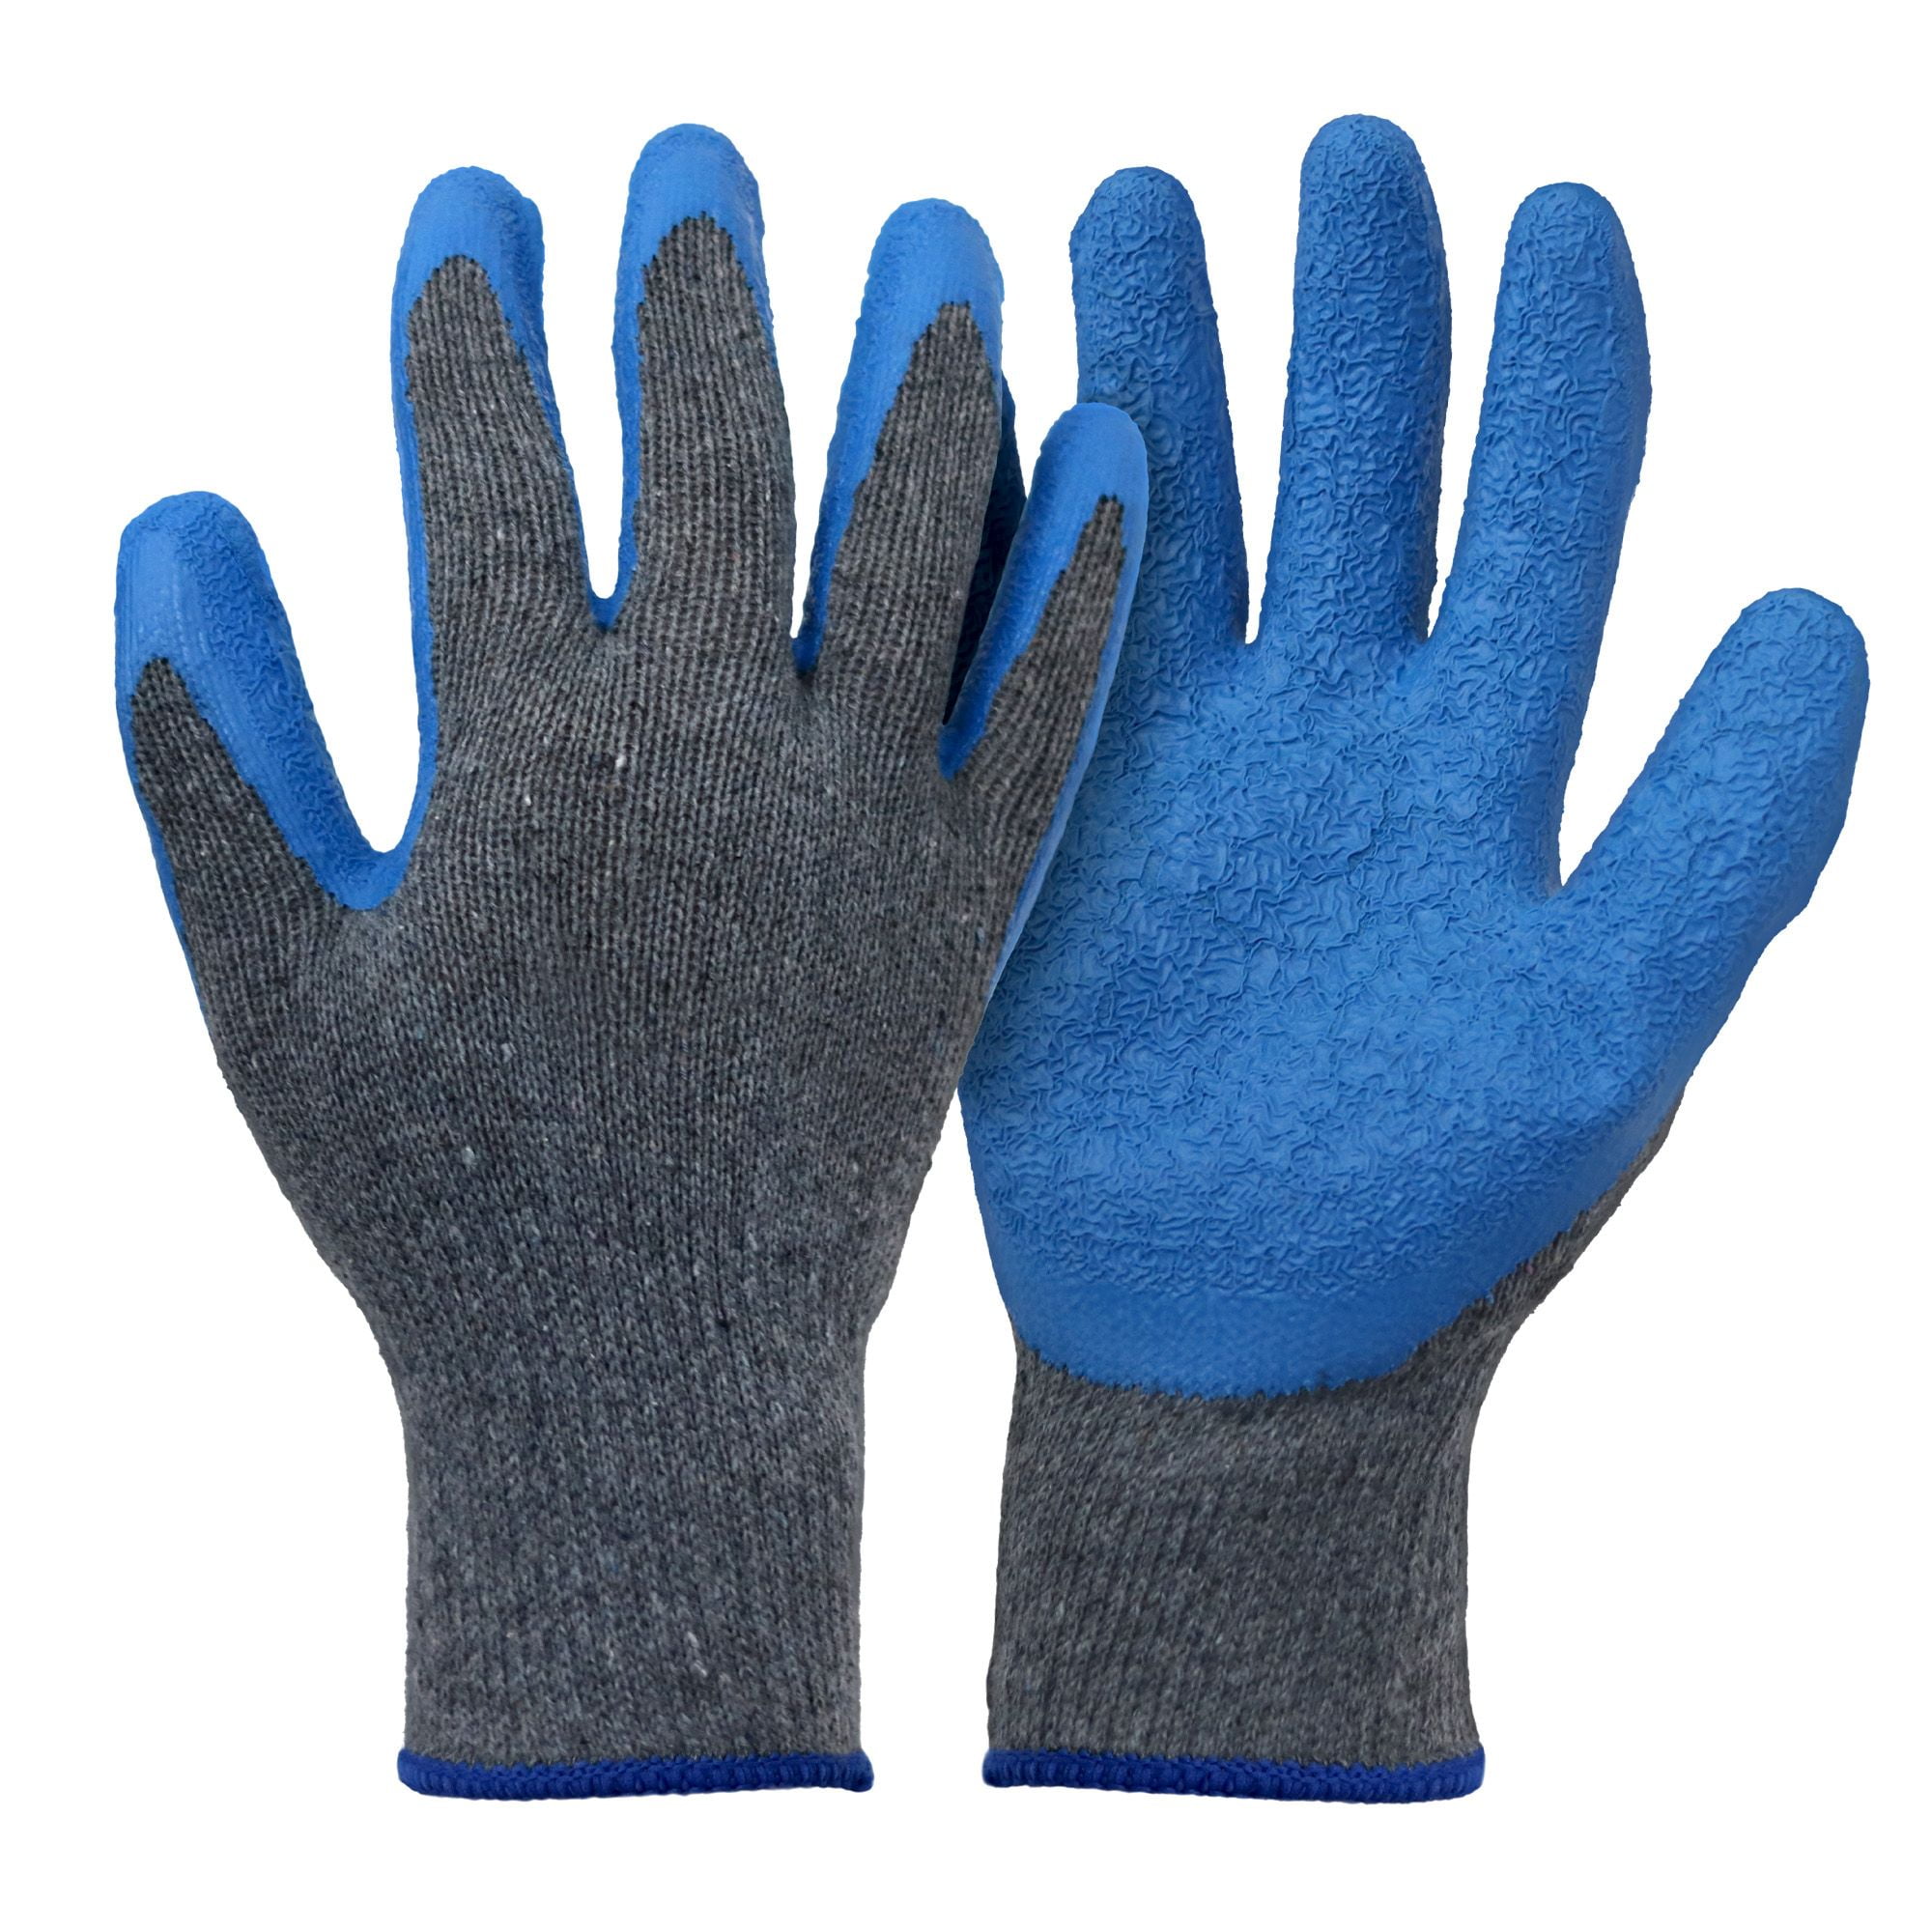 24 Pairs Latex PU Coated Work Gloves Safety Gardening Grip Mechanic Builders UK 